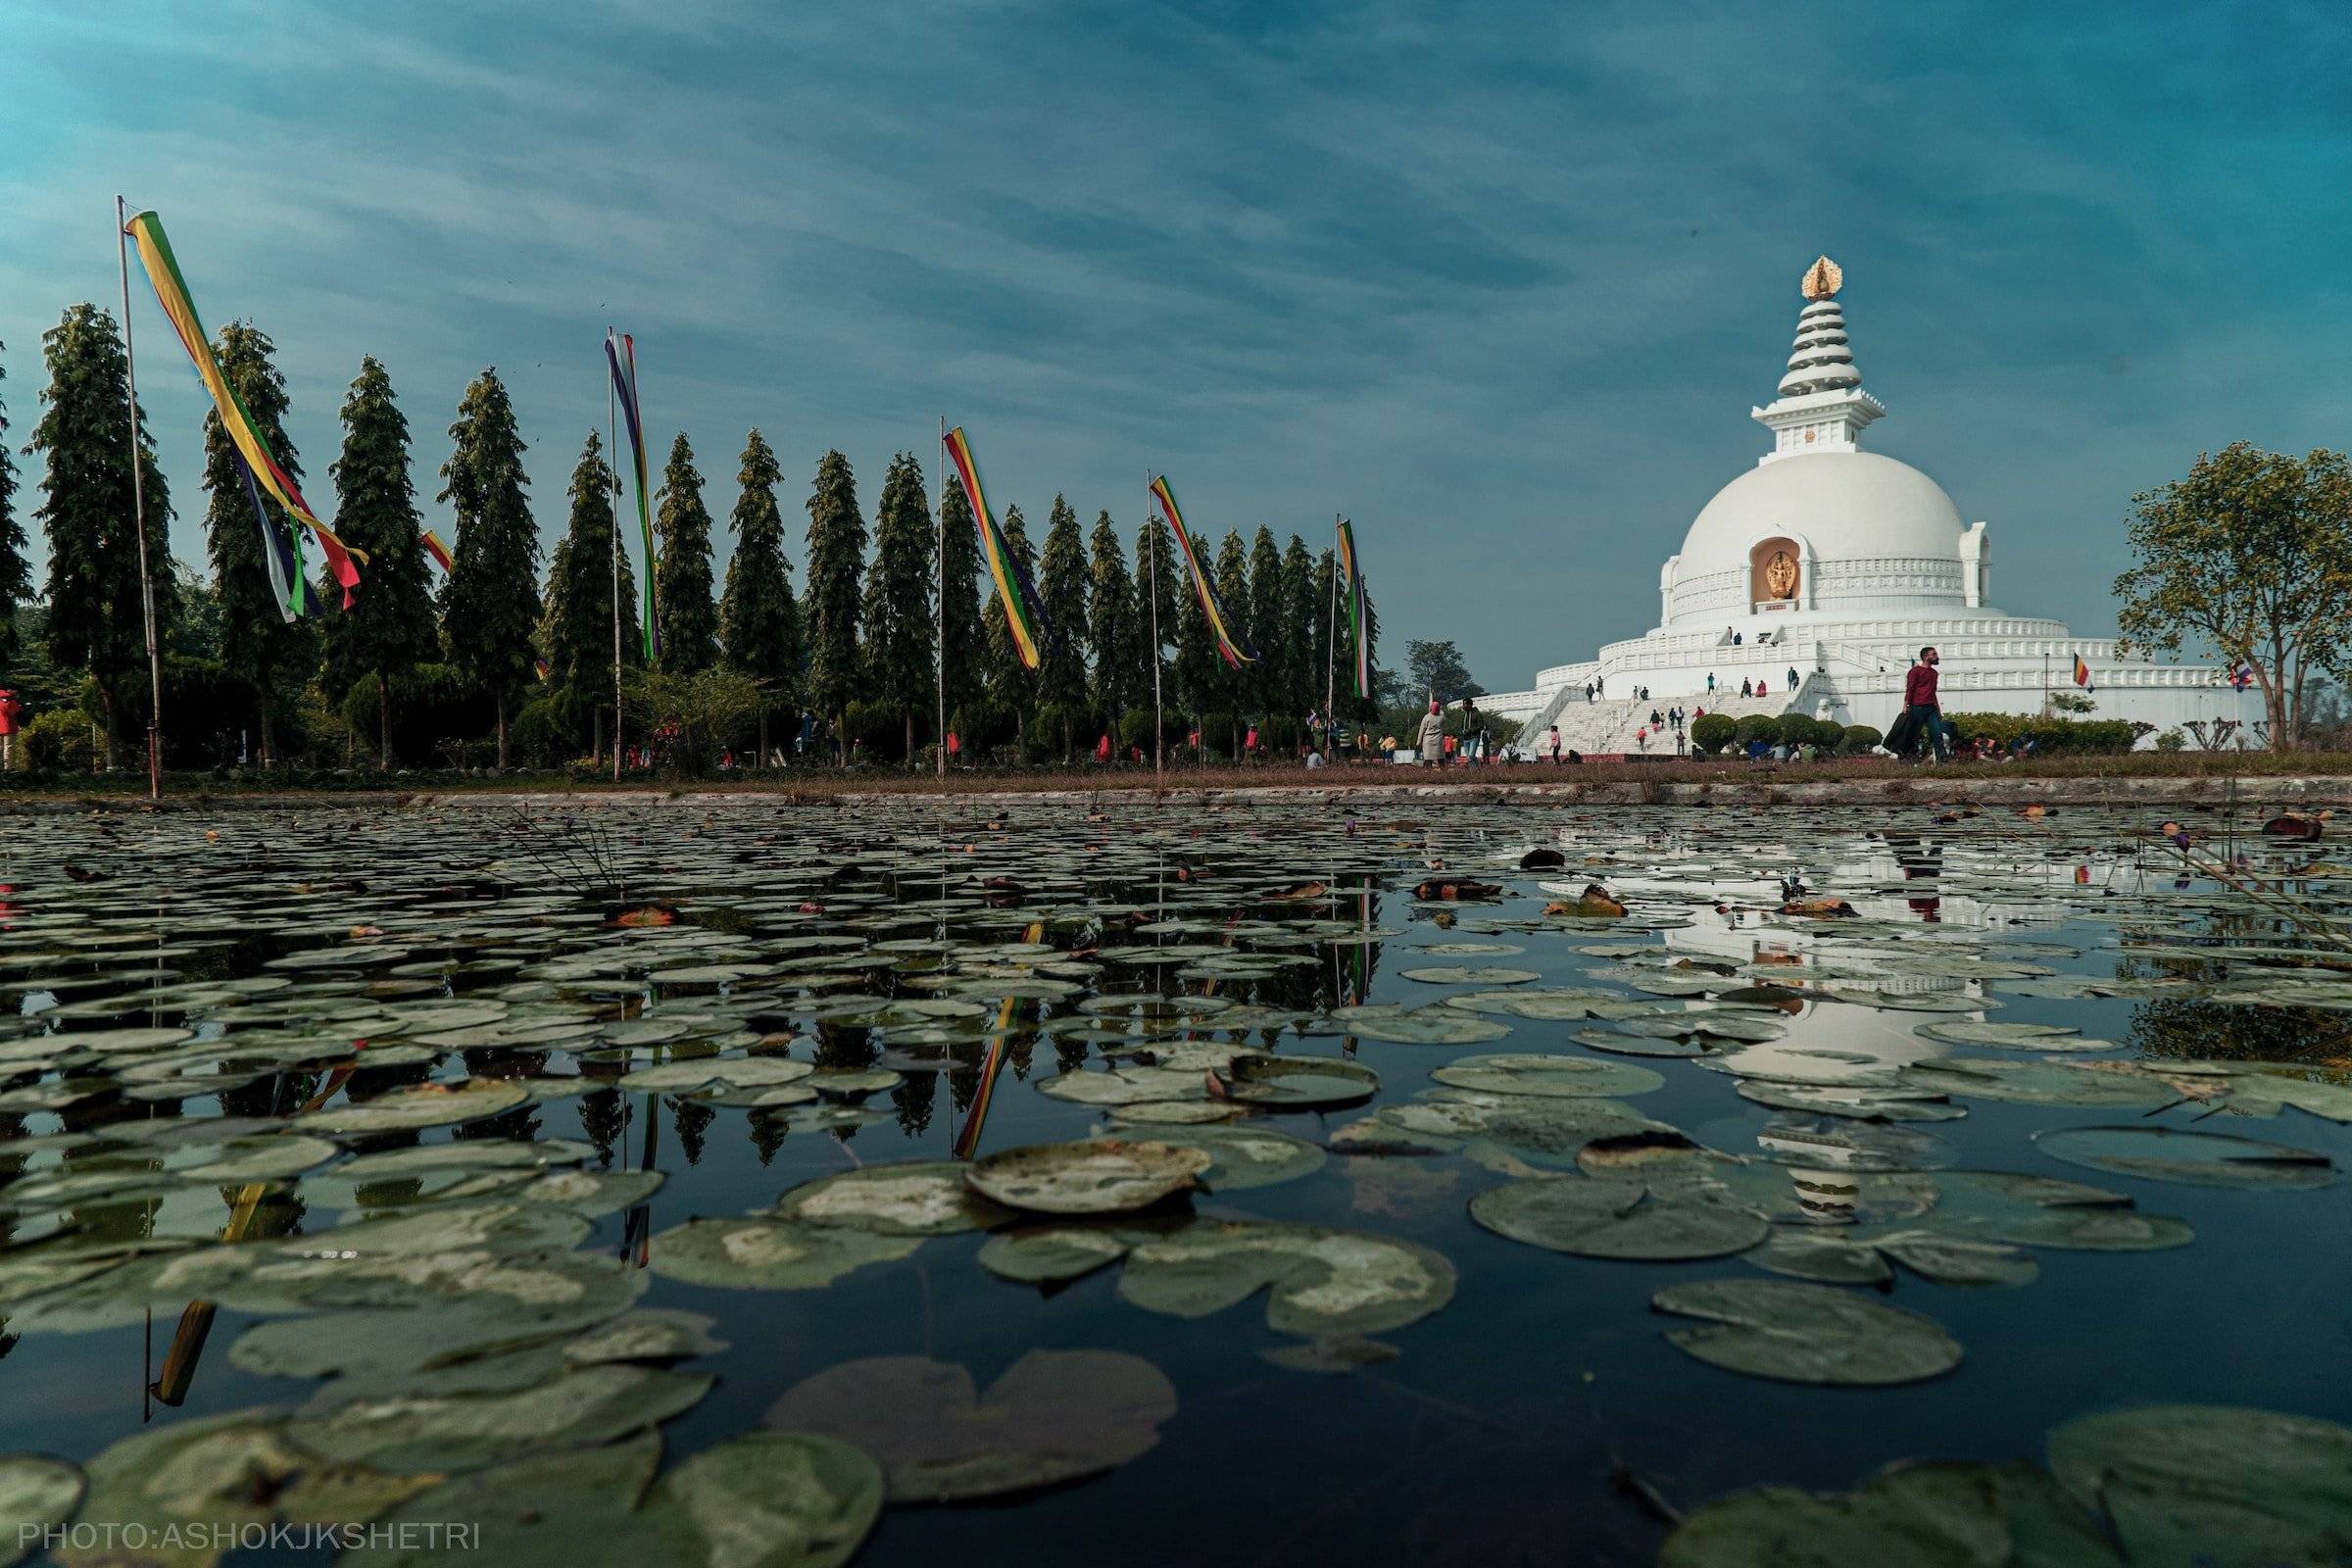 Spiritual Tour: Budismo y Bienestar en Nepal